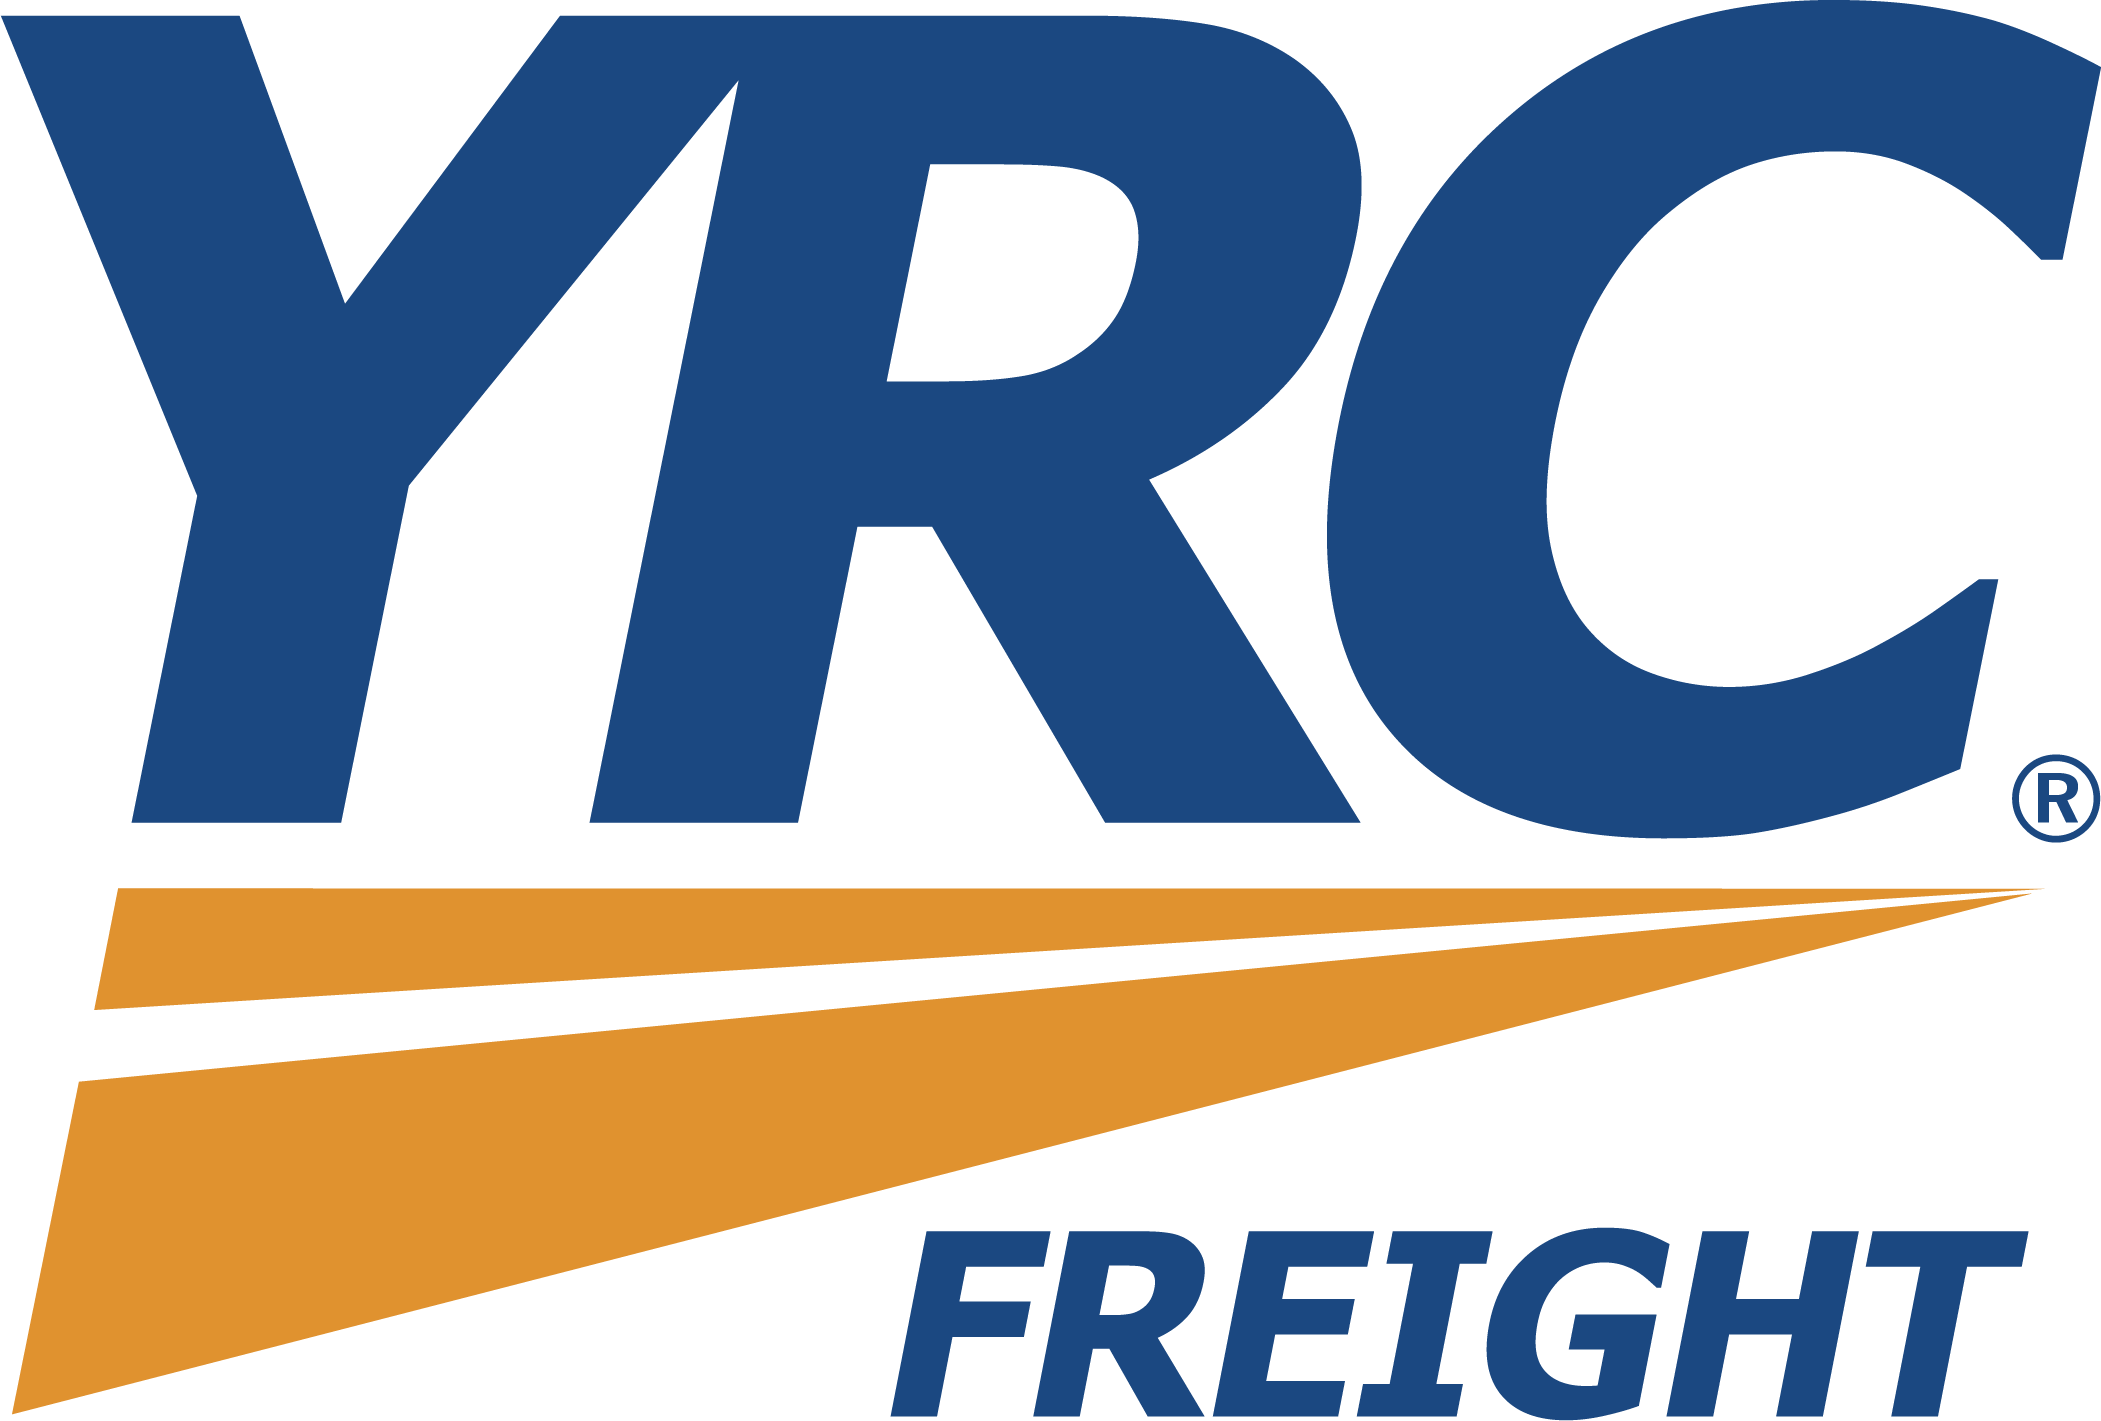 YRC Freight Logo - Logos and Photo. YRC Freight Original LTL Carrier Since 1924